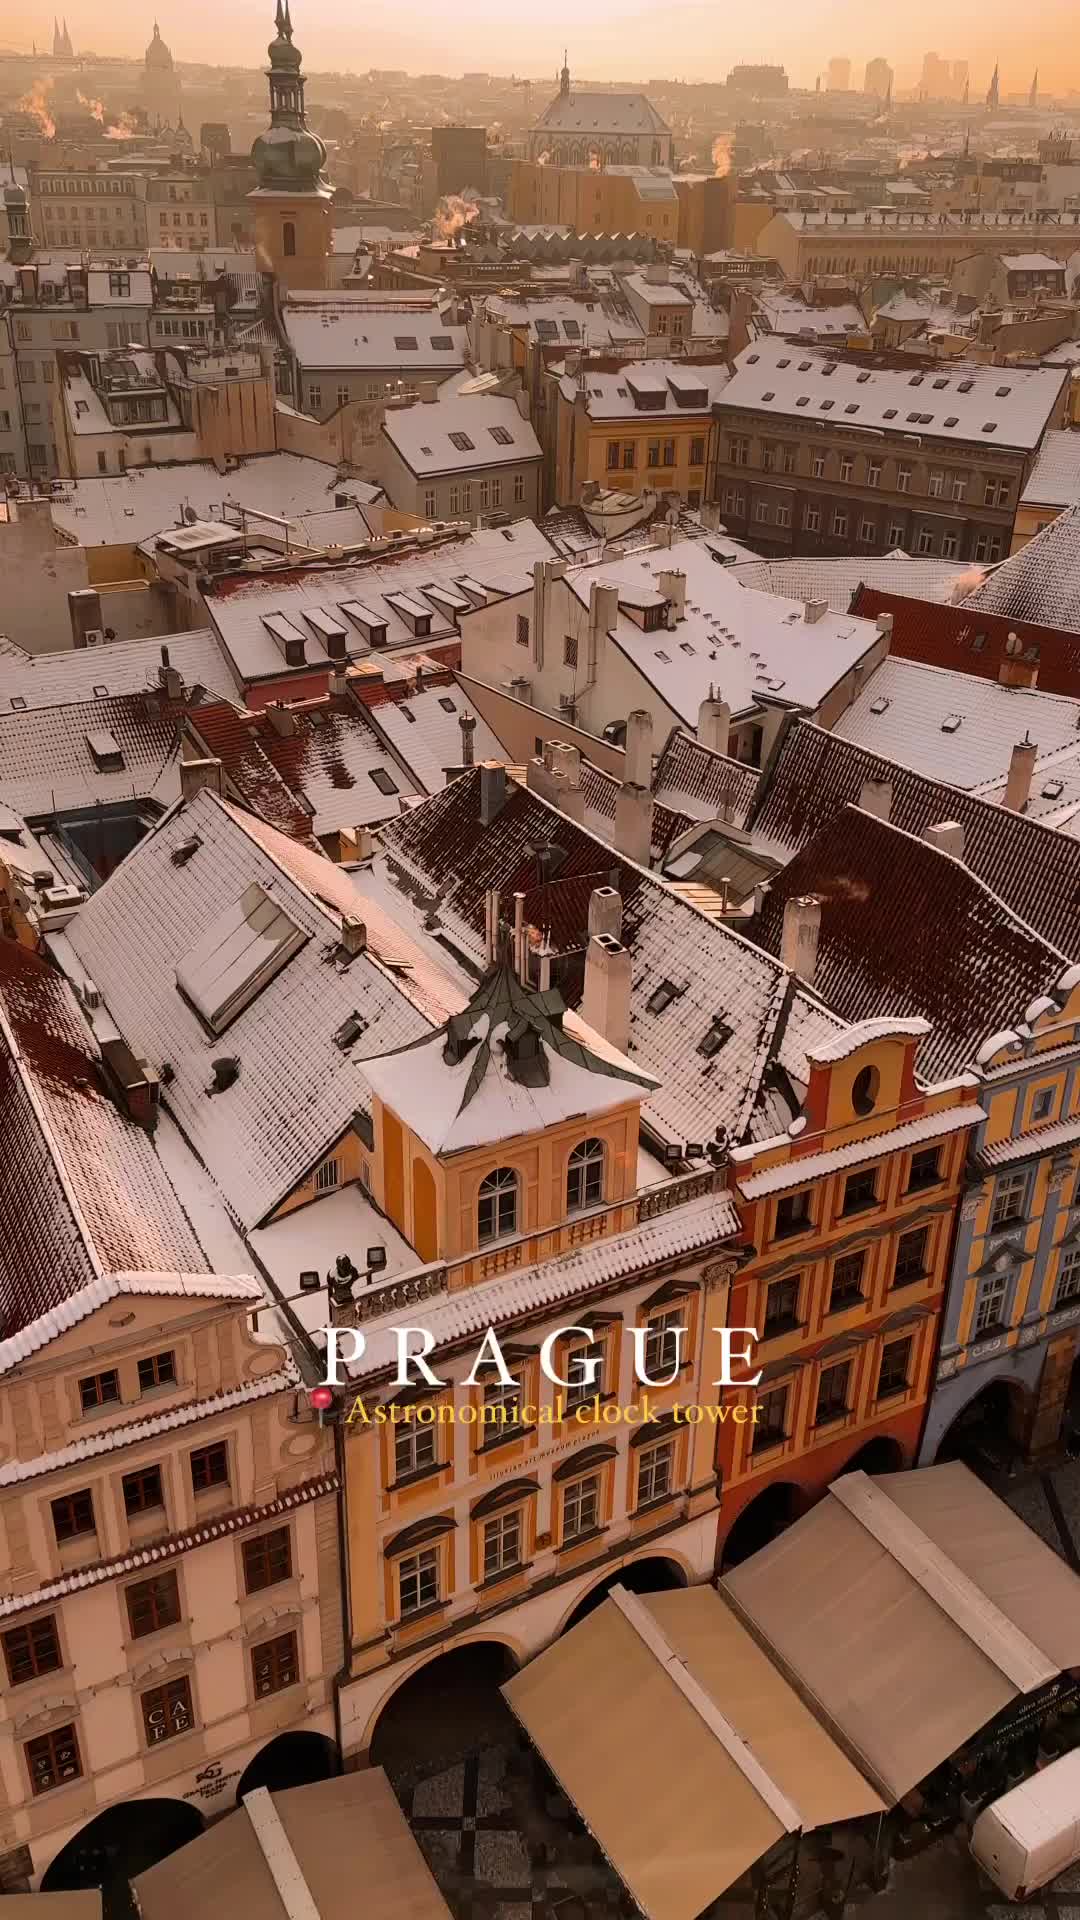 Best Views of Prague: Visit Astronomical Clock Tower